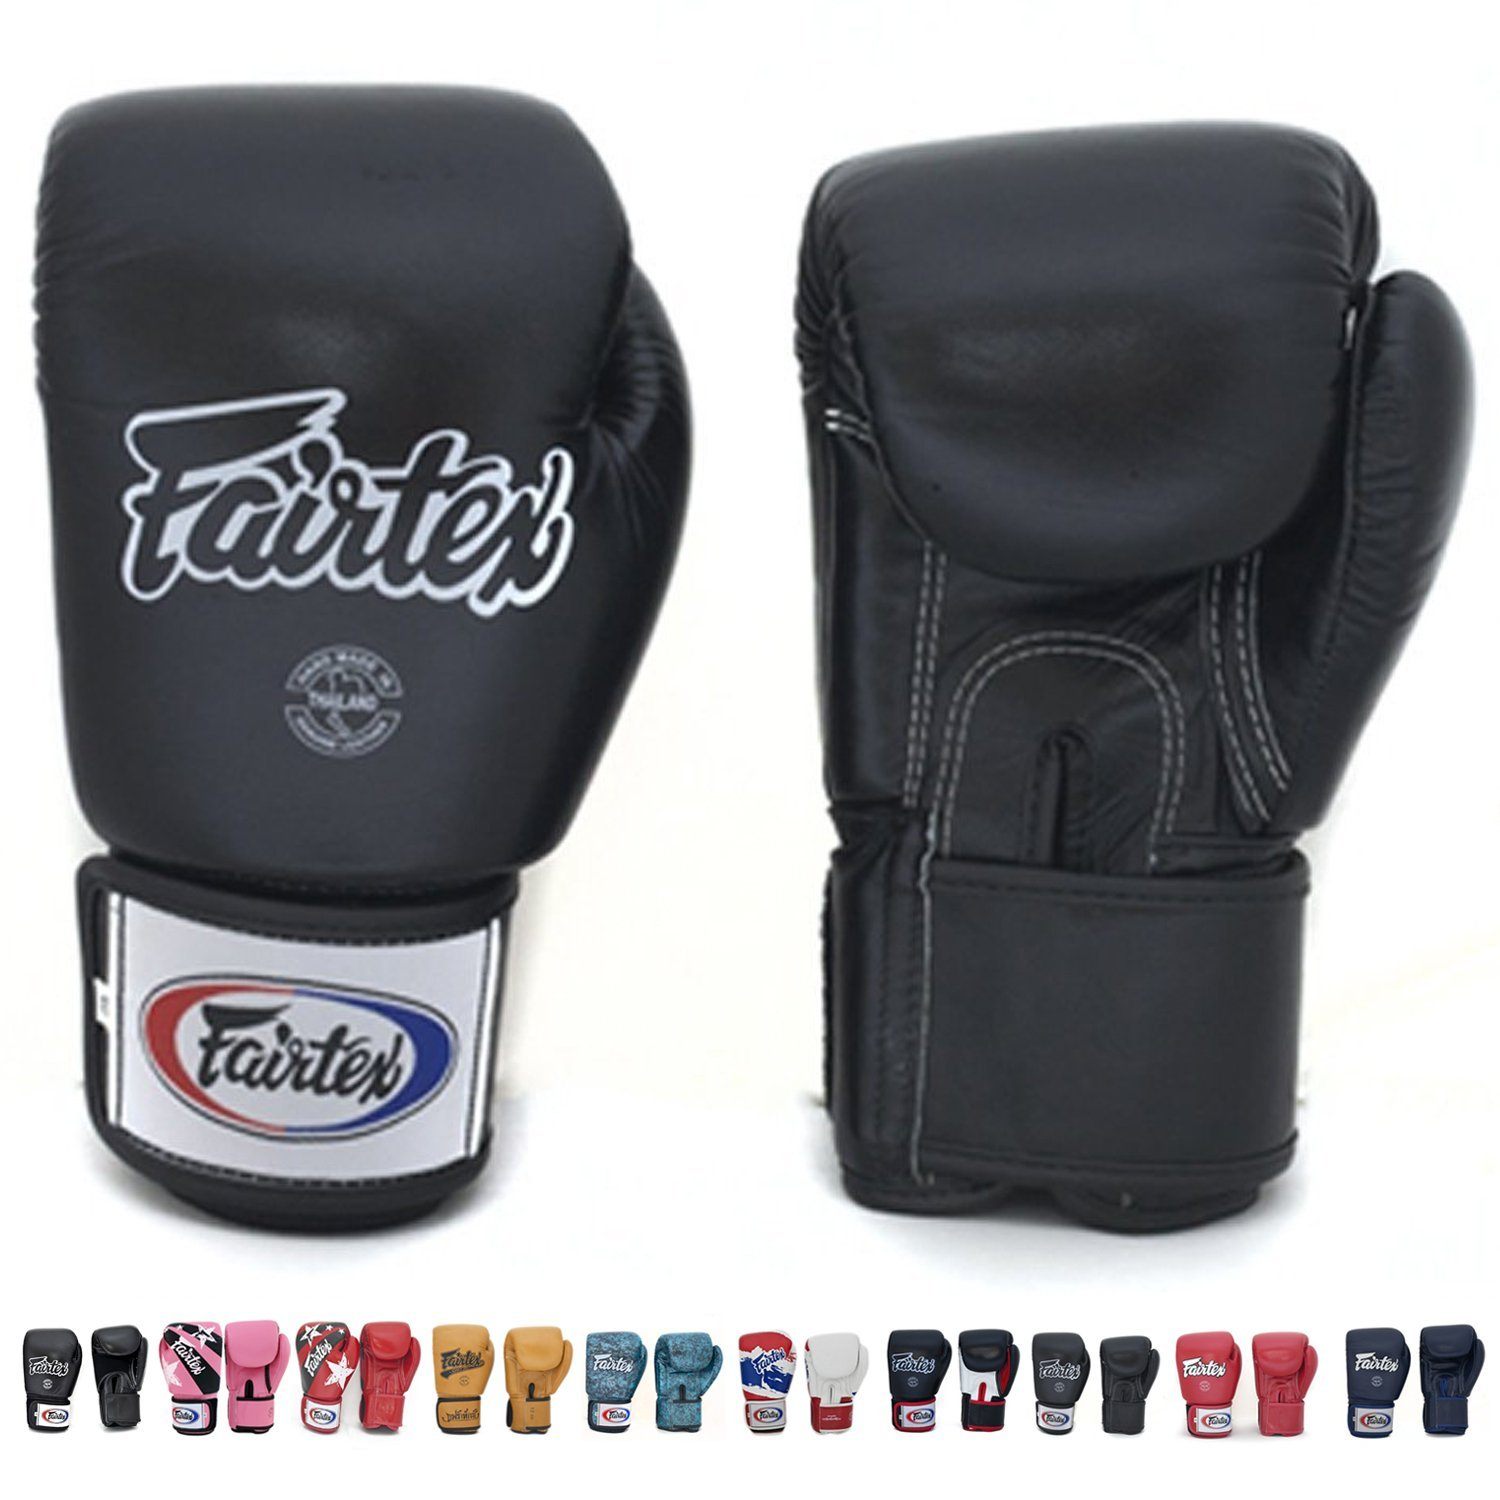 Best Muay Thai Gloves - Fairtex